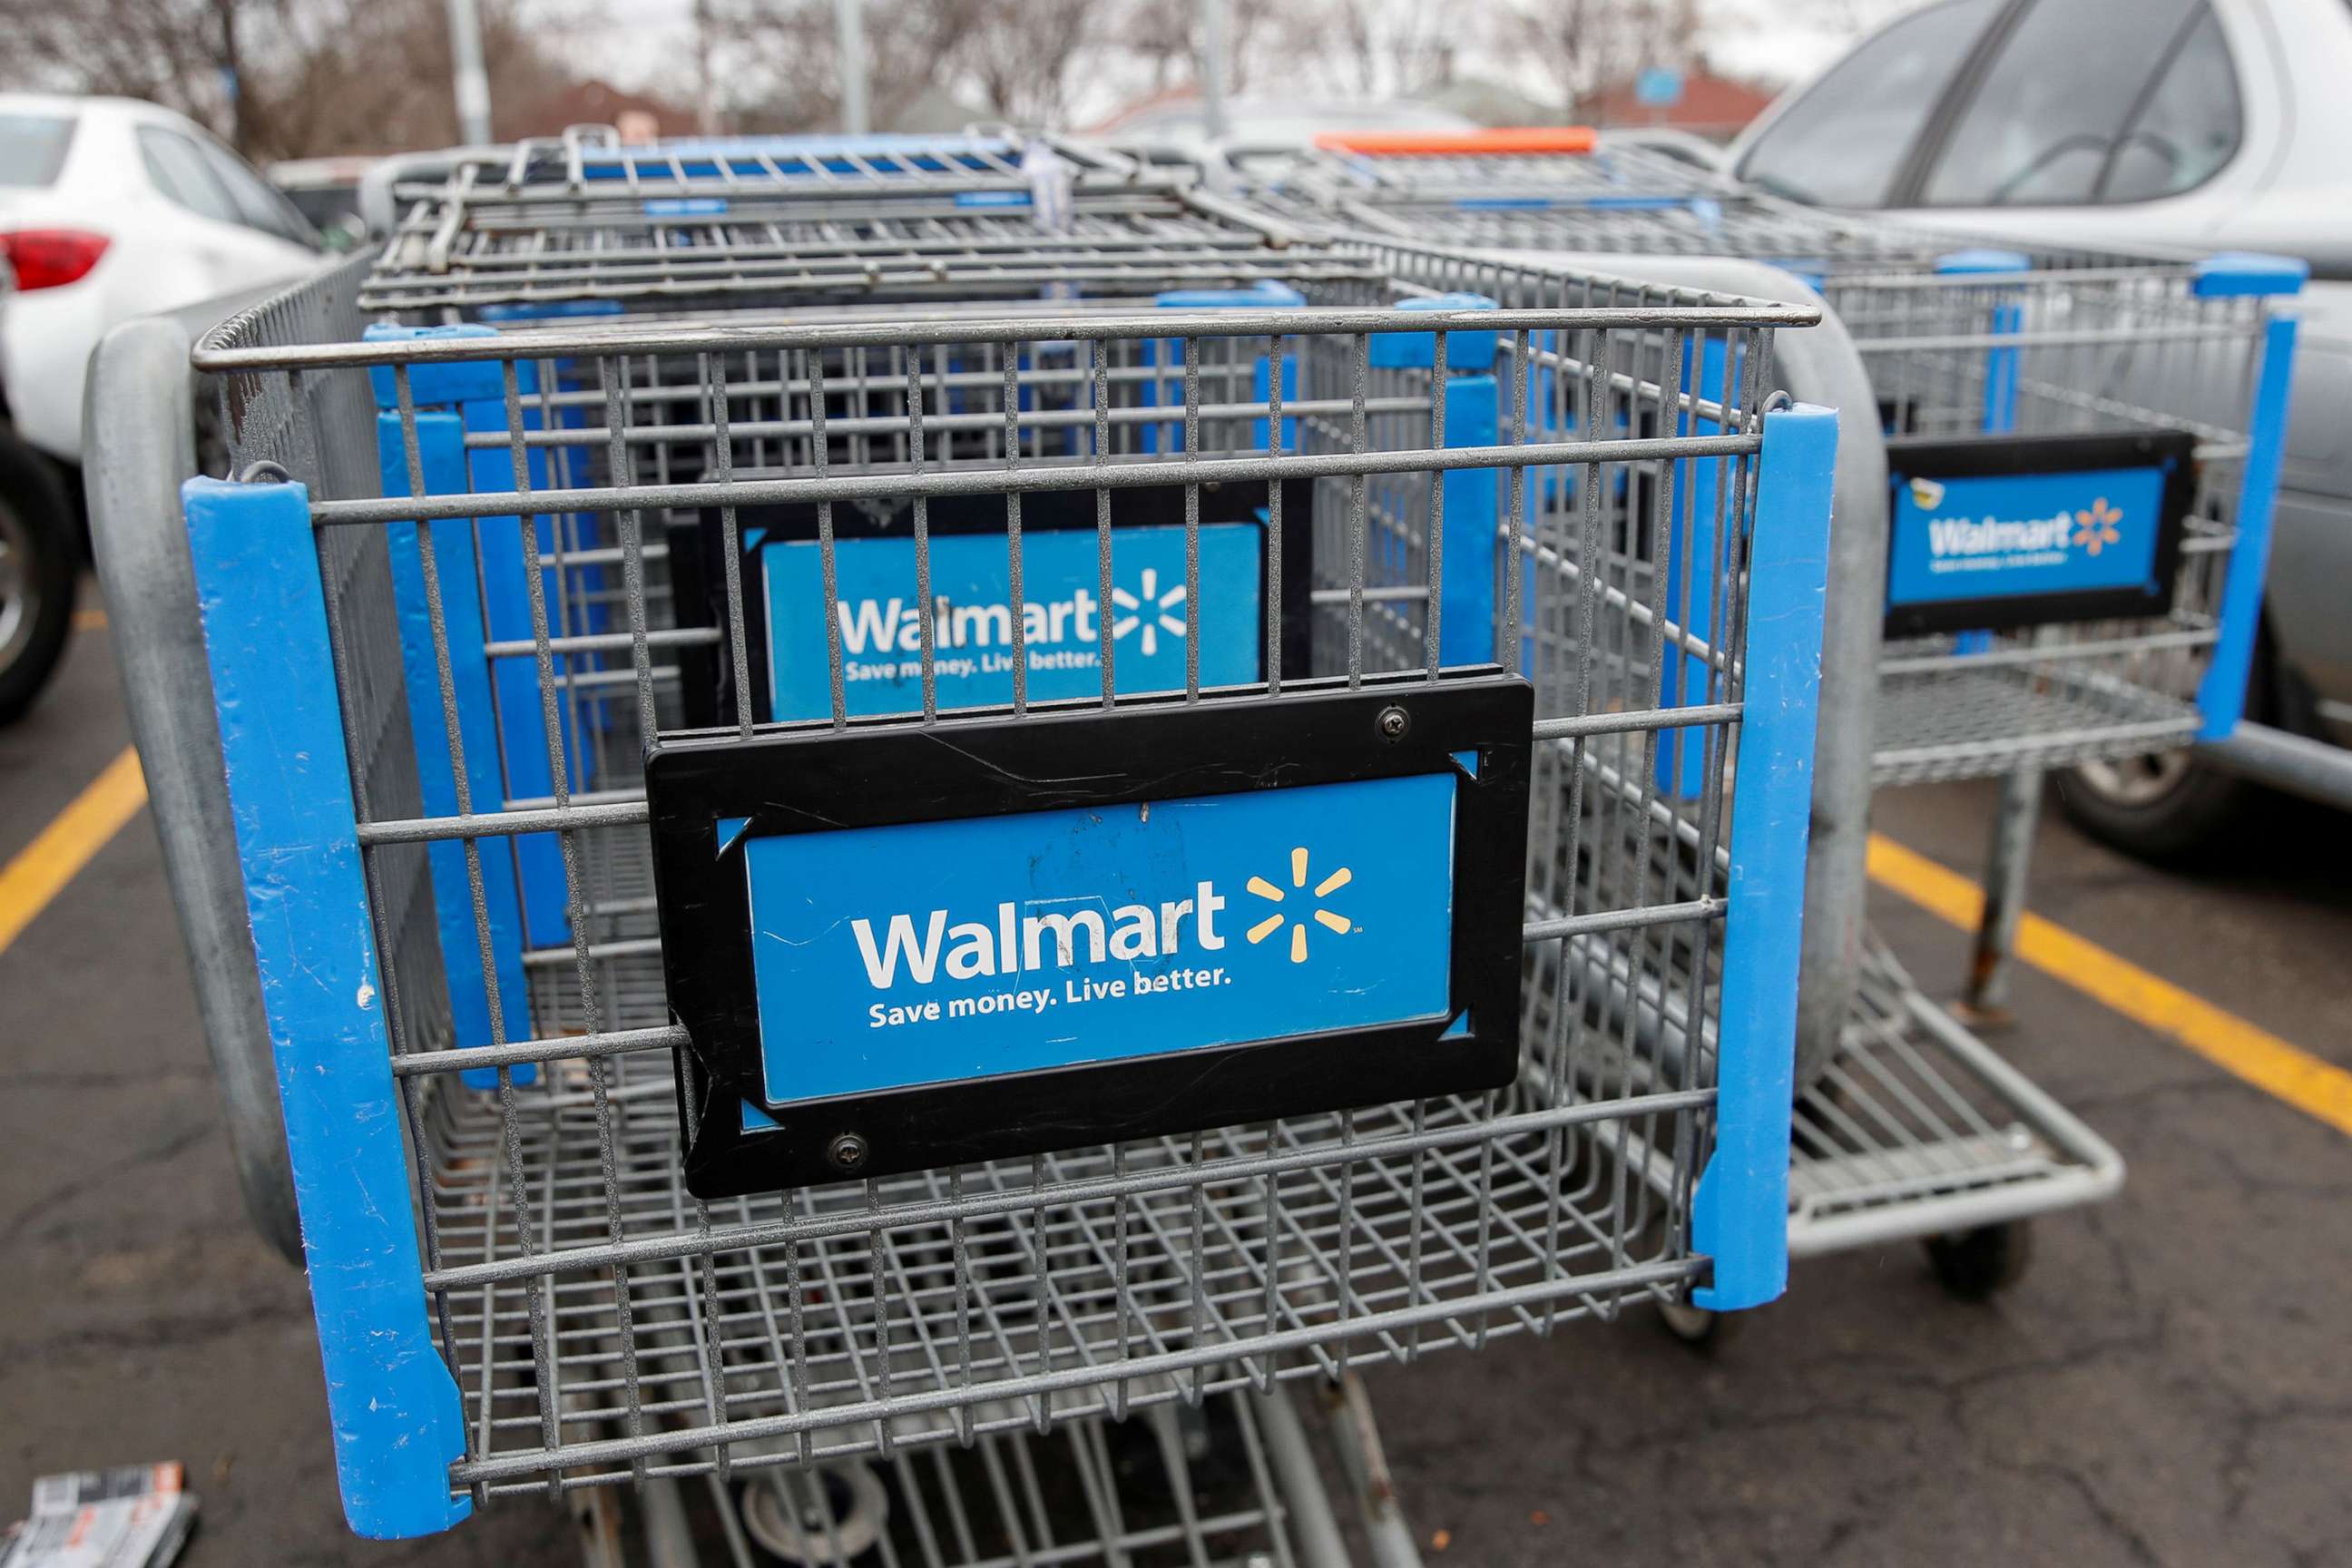 Worcester Closes Walmart After 23 People Get Coronavirus